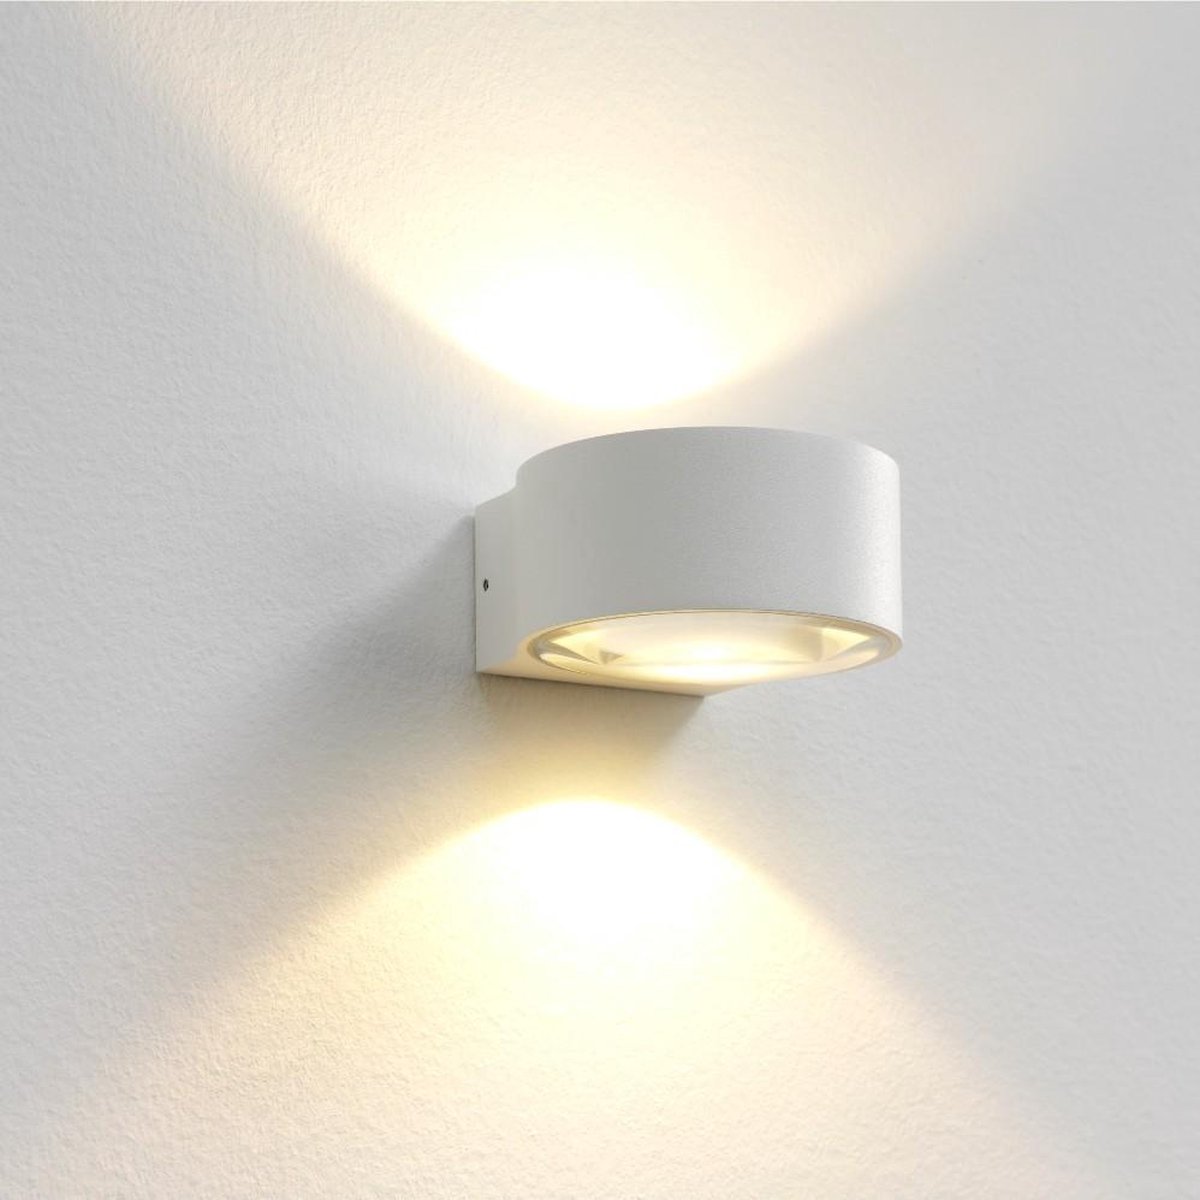 Wandlamp Hudson Wit - Ø11cm - LED 2x4W 2700K 2x360lm - IP54 > wandlamp binnen wit | wandlamp buiten wit | wandlamp wit | buitenlamp wit | muurlamp wit | led lamp wit | sfeer lamp wit